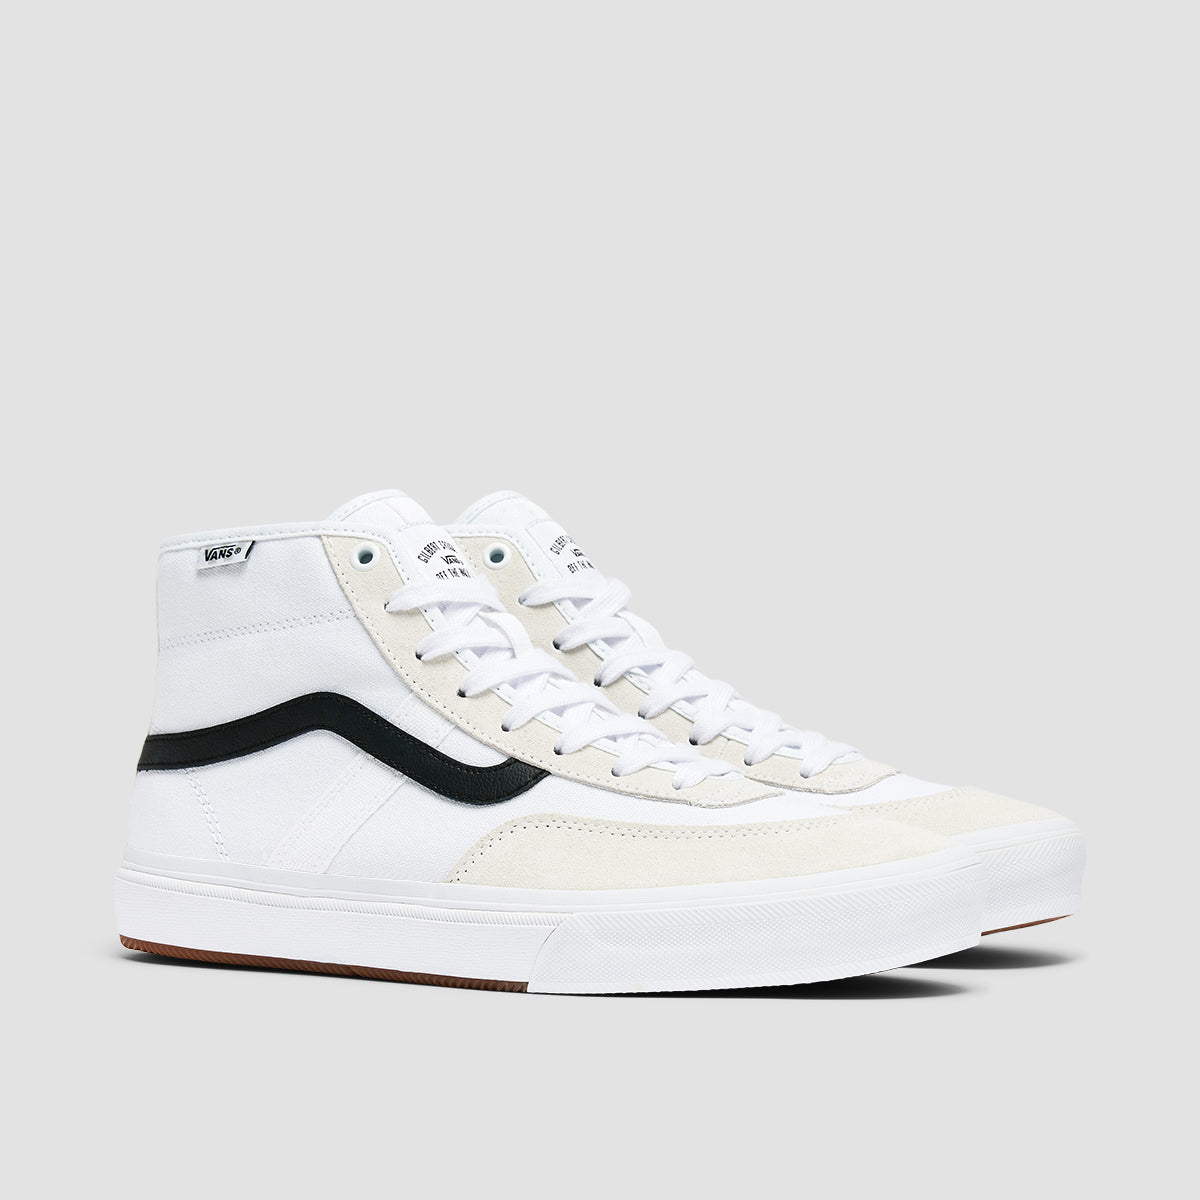 Vans Crockett High Top Shoes - White/Black/Gum